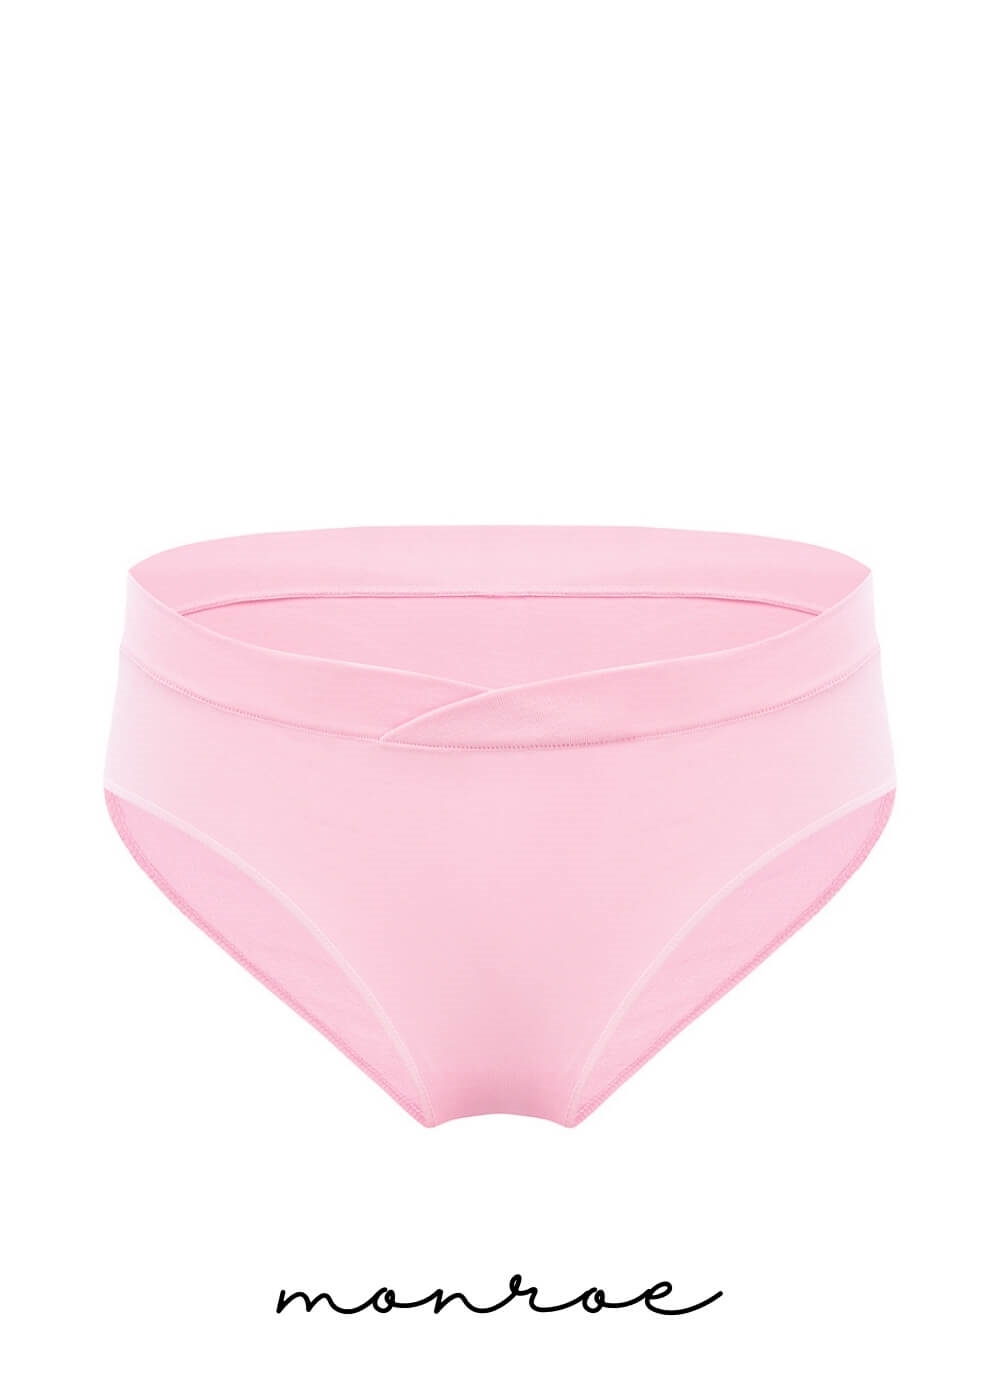 Queen Bee - Monroe Under Bump Maternity Underwear Briefs in Pink